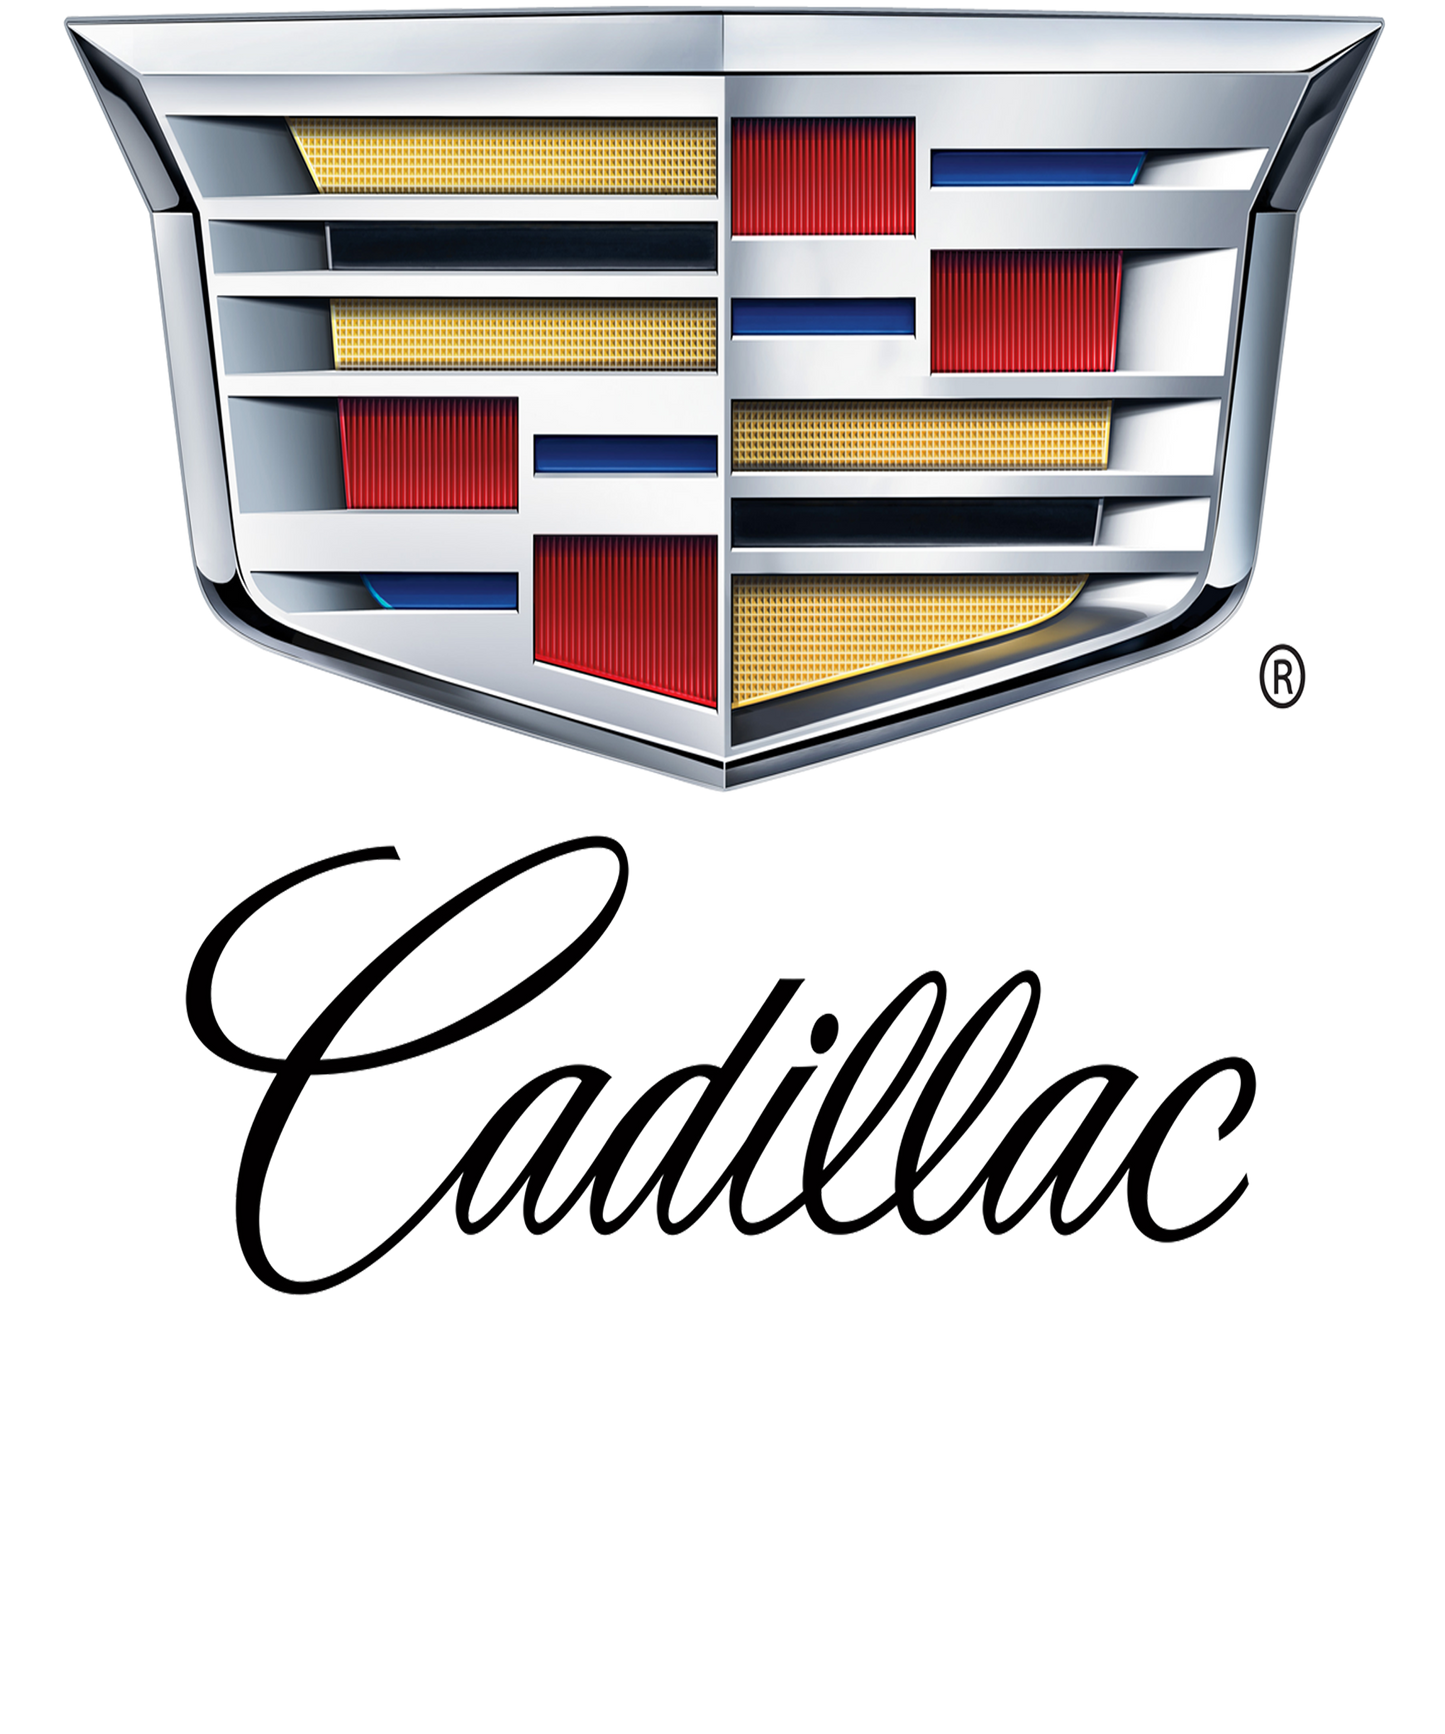 Coffee Mug: Cadillac Logo - 11 or 15 Oz with Black Lettering - White - FREE SHIPPING